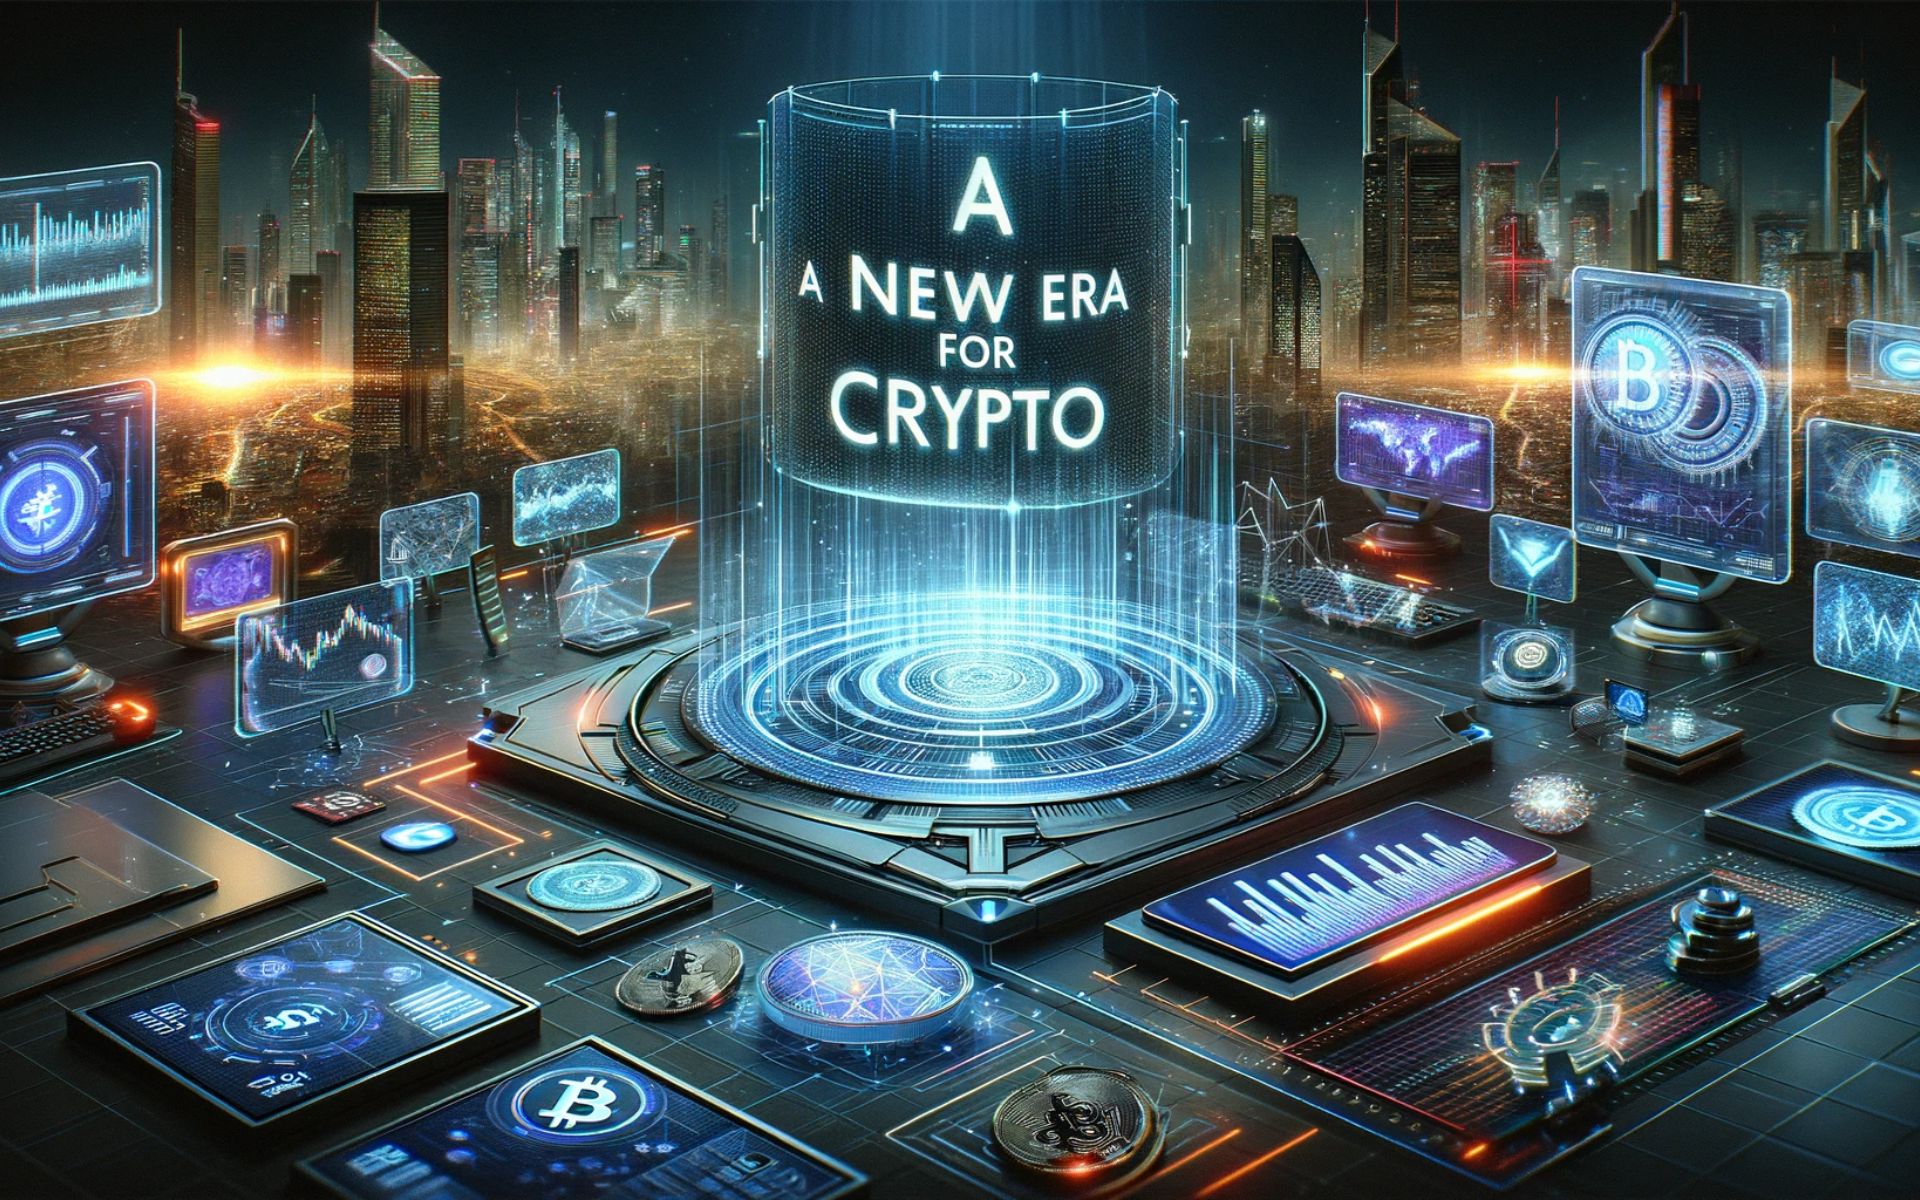 A New Era for Crypto